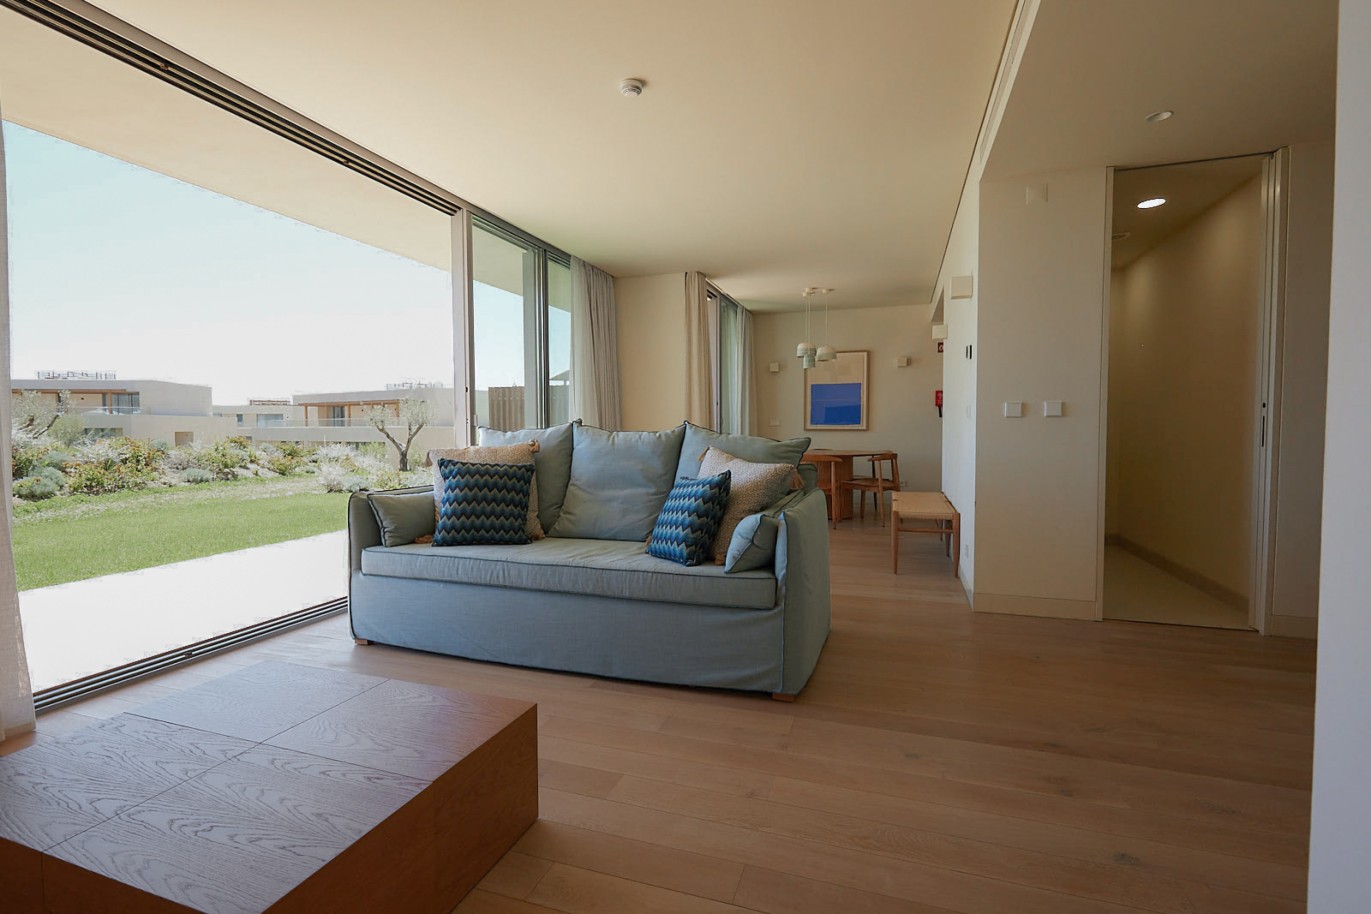 2 bedroom apartment in resort, for sale in Porches, Algarve_229170